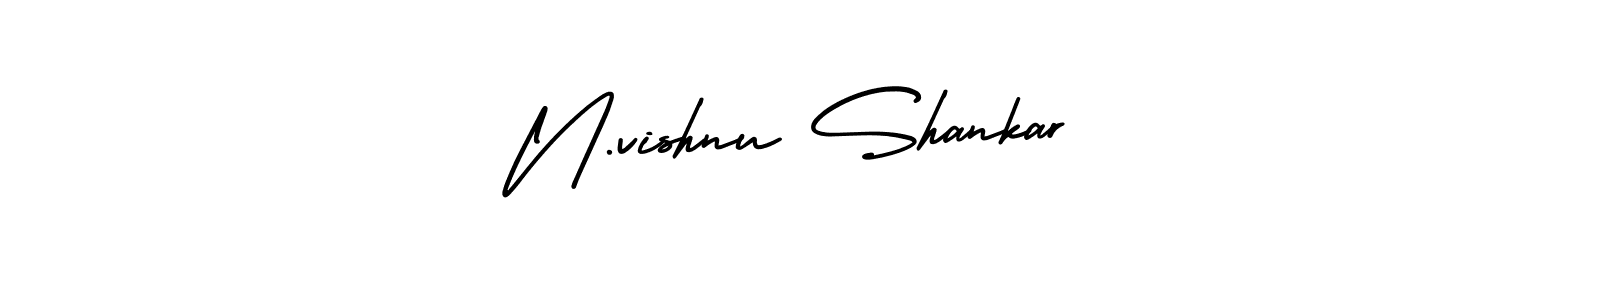 Design your own signature with our free online signature maker. With this signature software, you can create a handwritten (AmerikaSignatureDemo-Regular) signature for name N.vishnu Shankar. N.vishnu Shankar signature style 3 images and pictures png